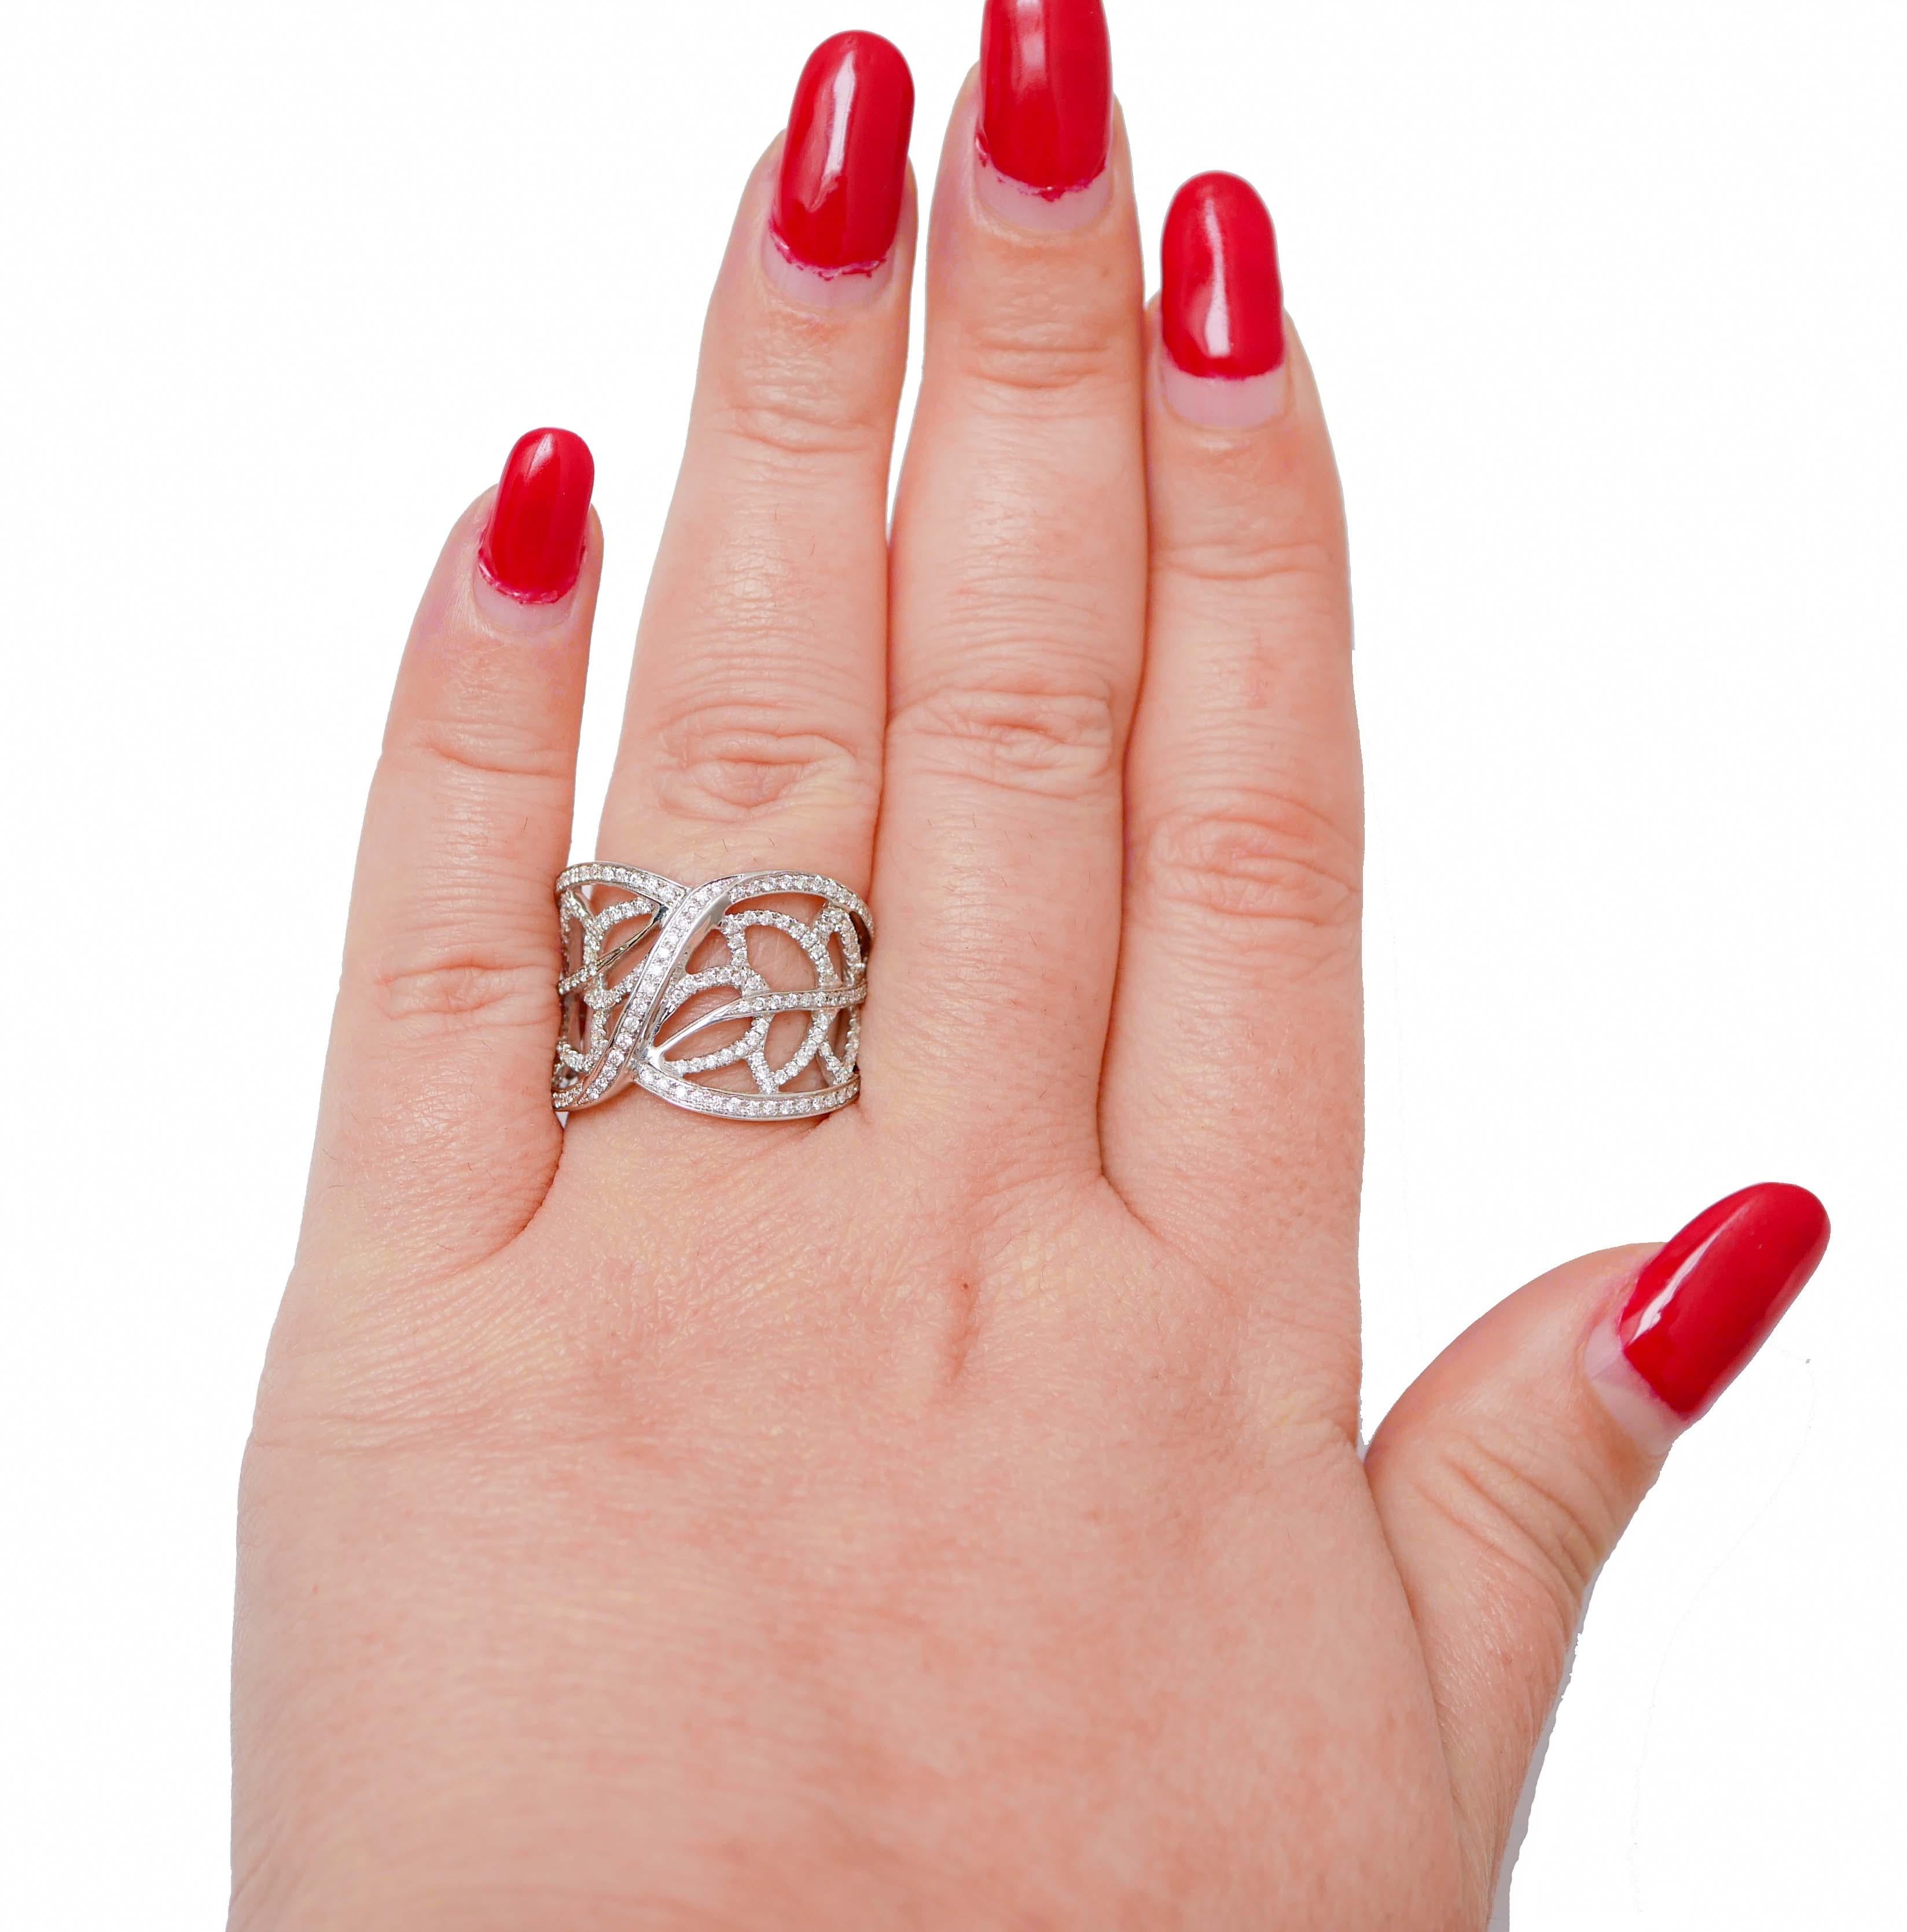 Brilliant Cut Diamonds, 18 Karat White Gold Band Ring. For Sale